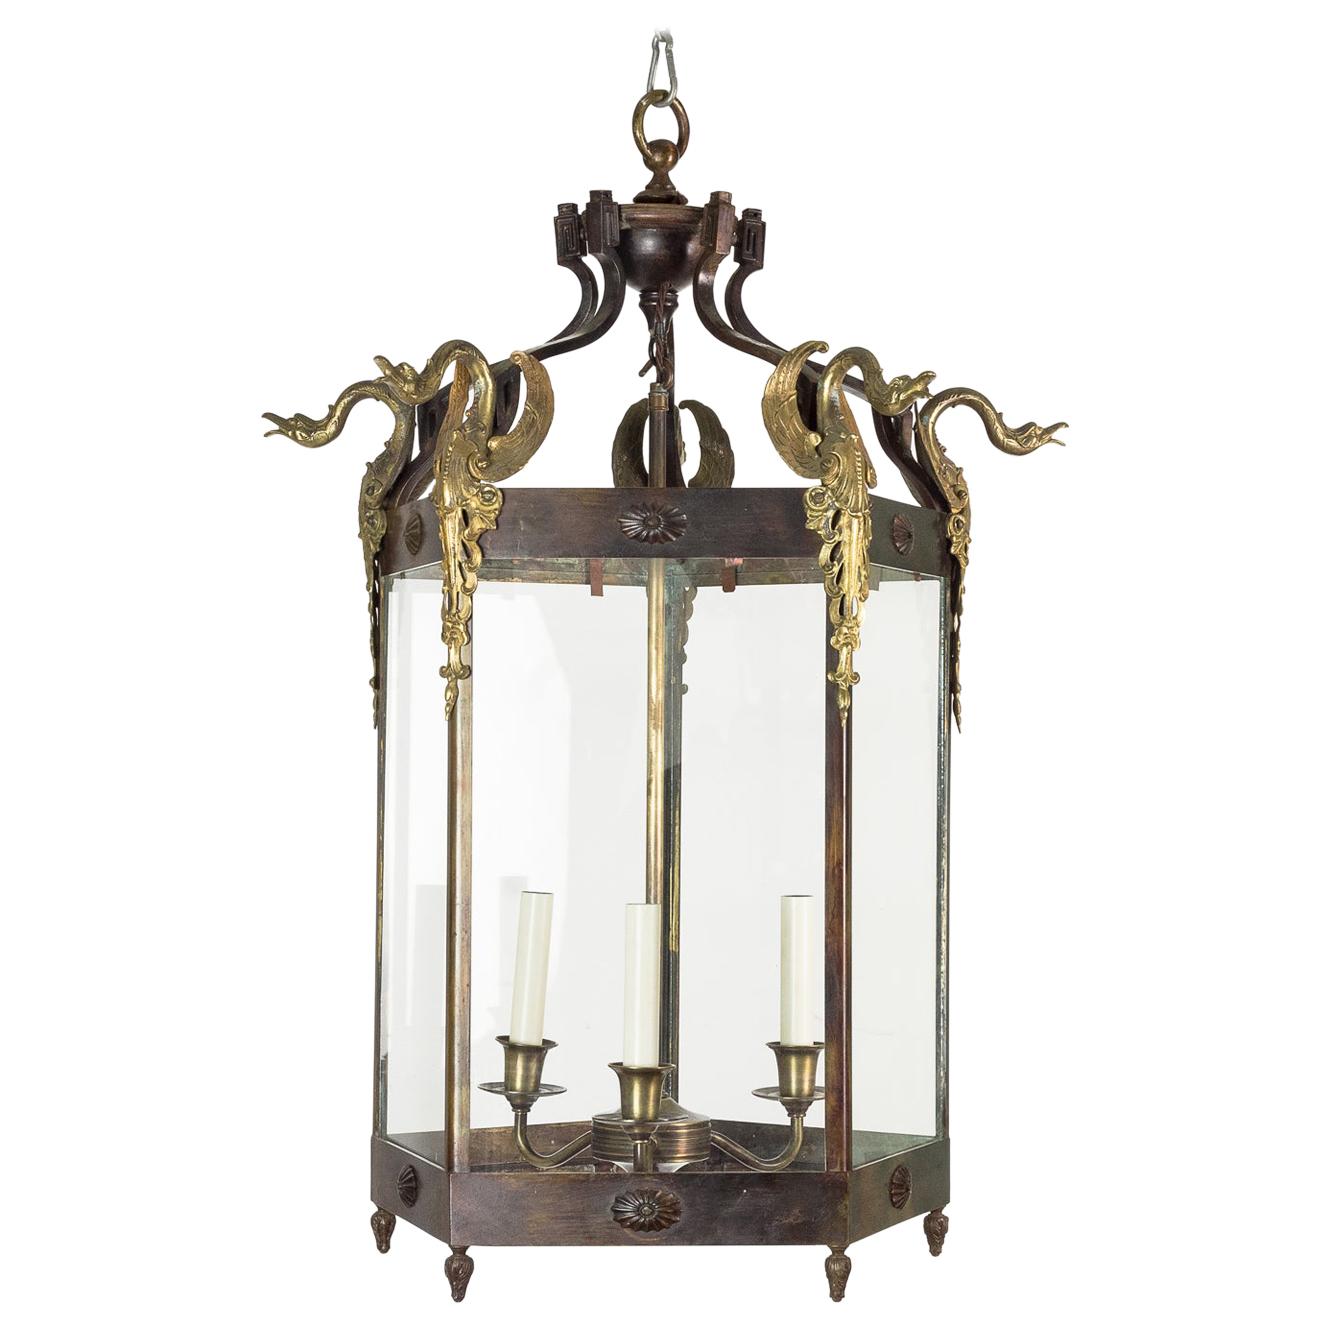 19th Century French Empire Style Hall Lantern